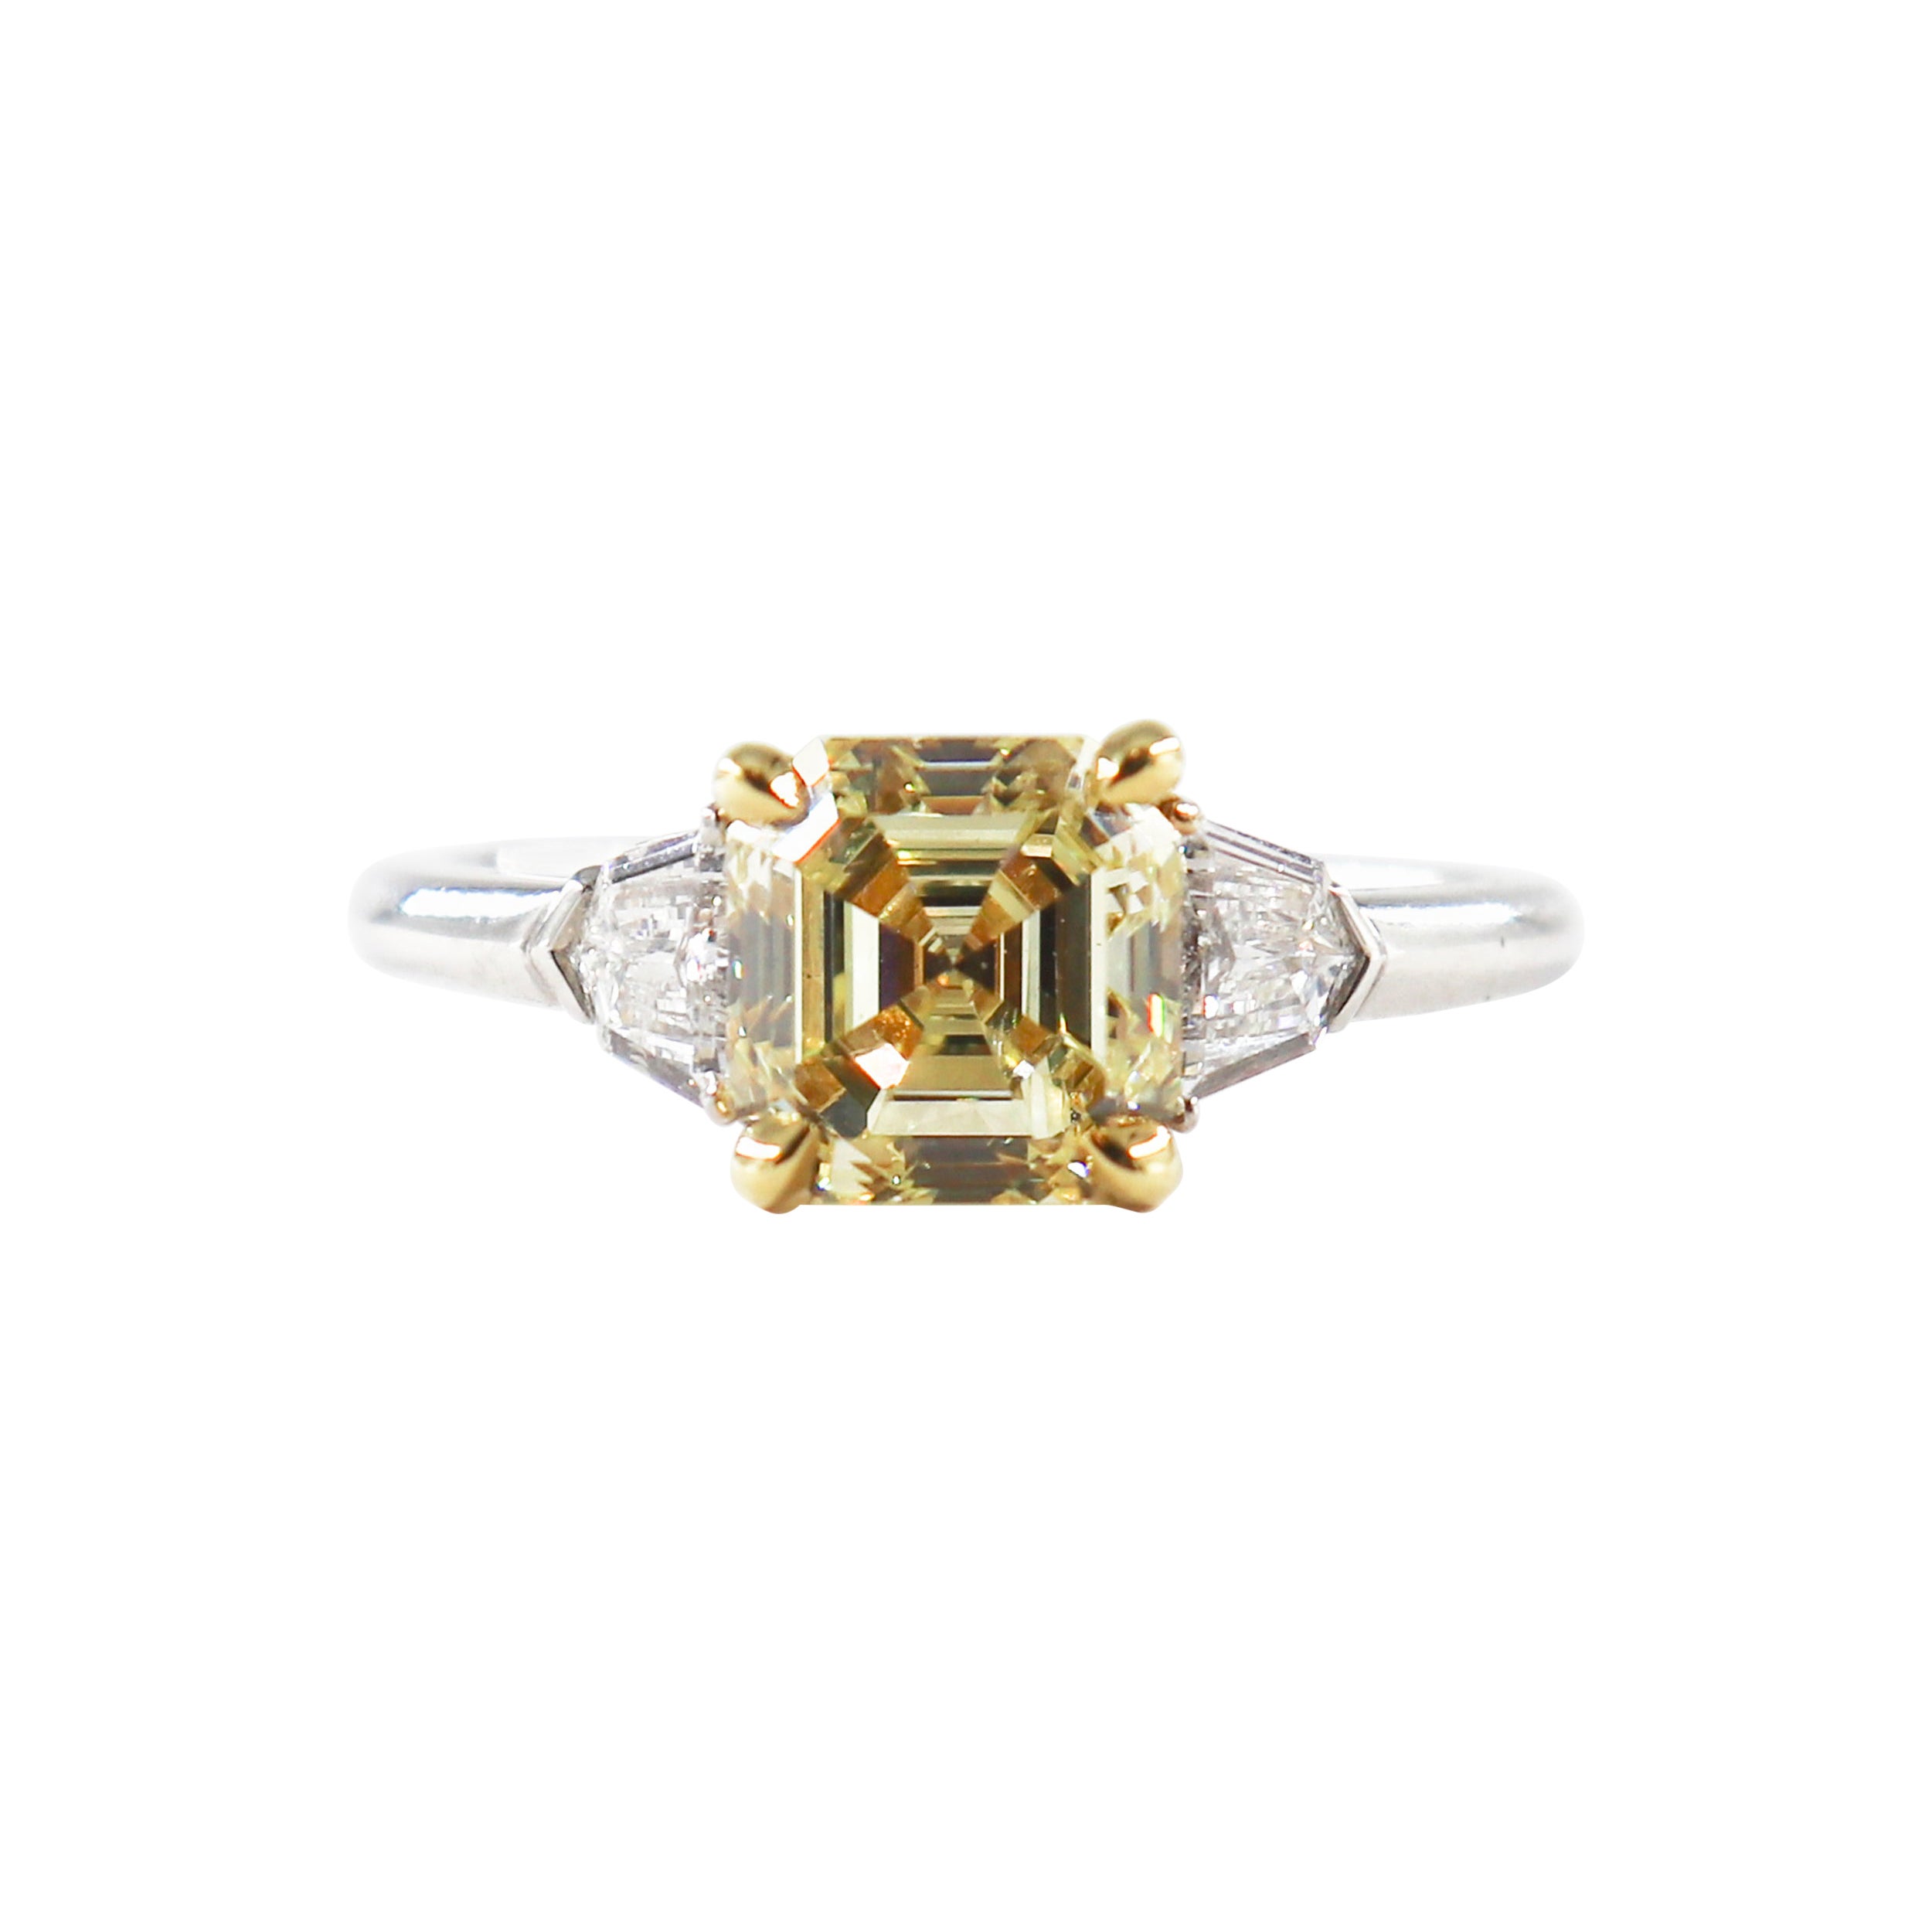 J. Birnbach GIA Certified 1.94 carat Fancy Yellow Asscher Cut Diamond Ring